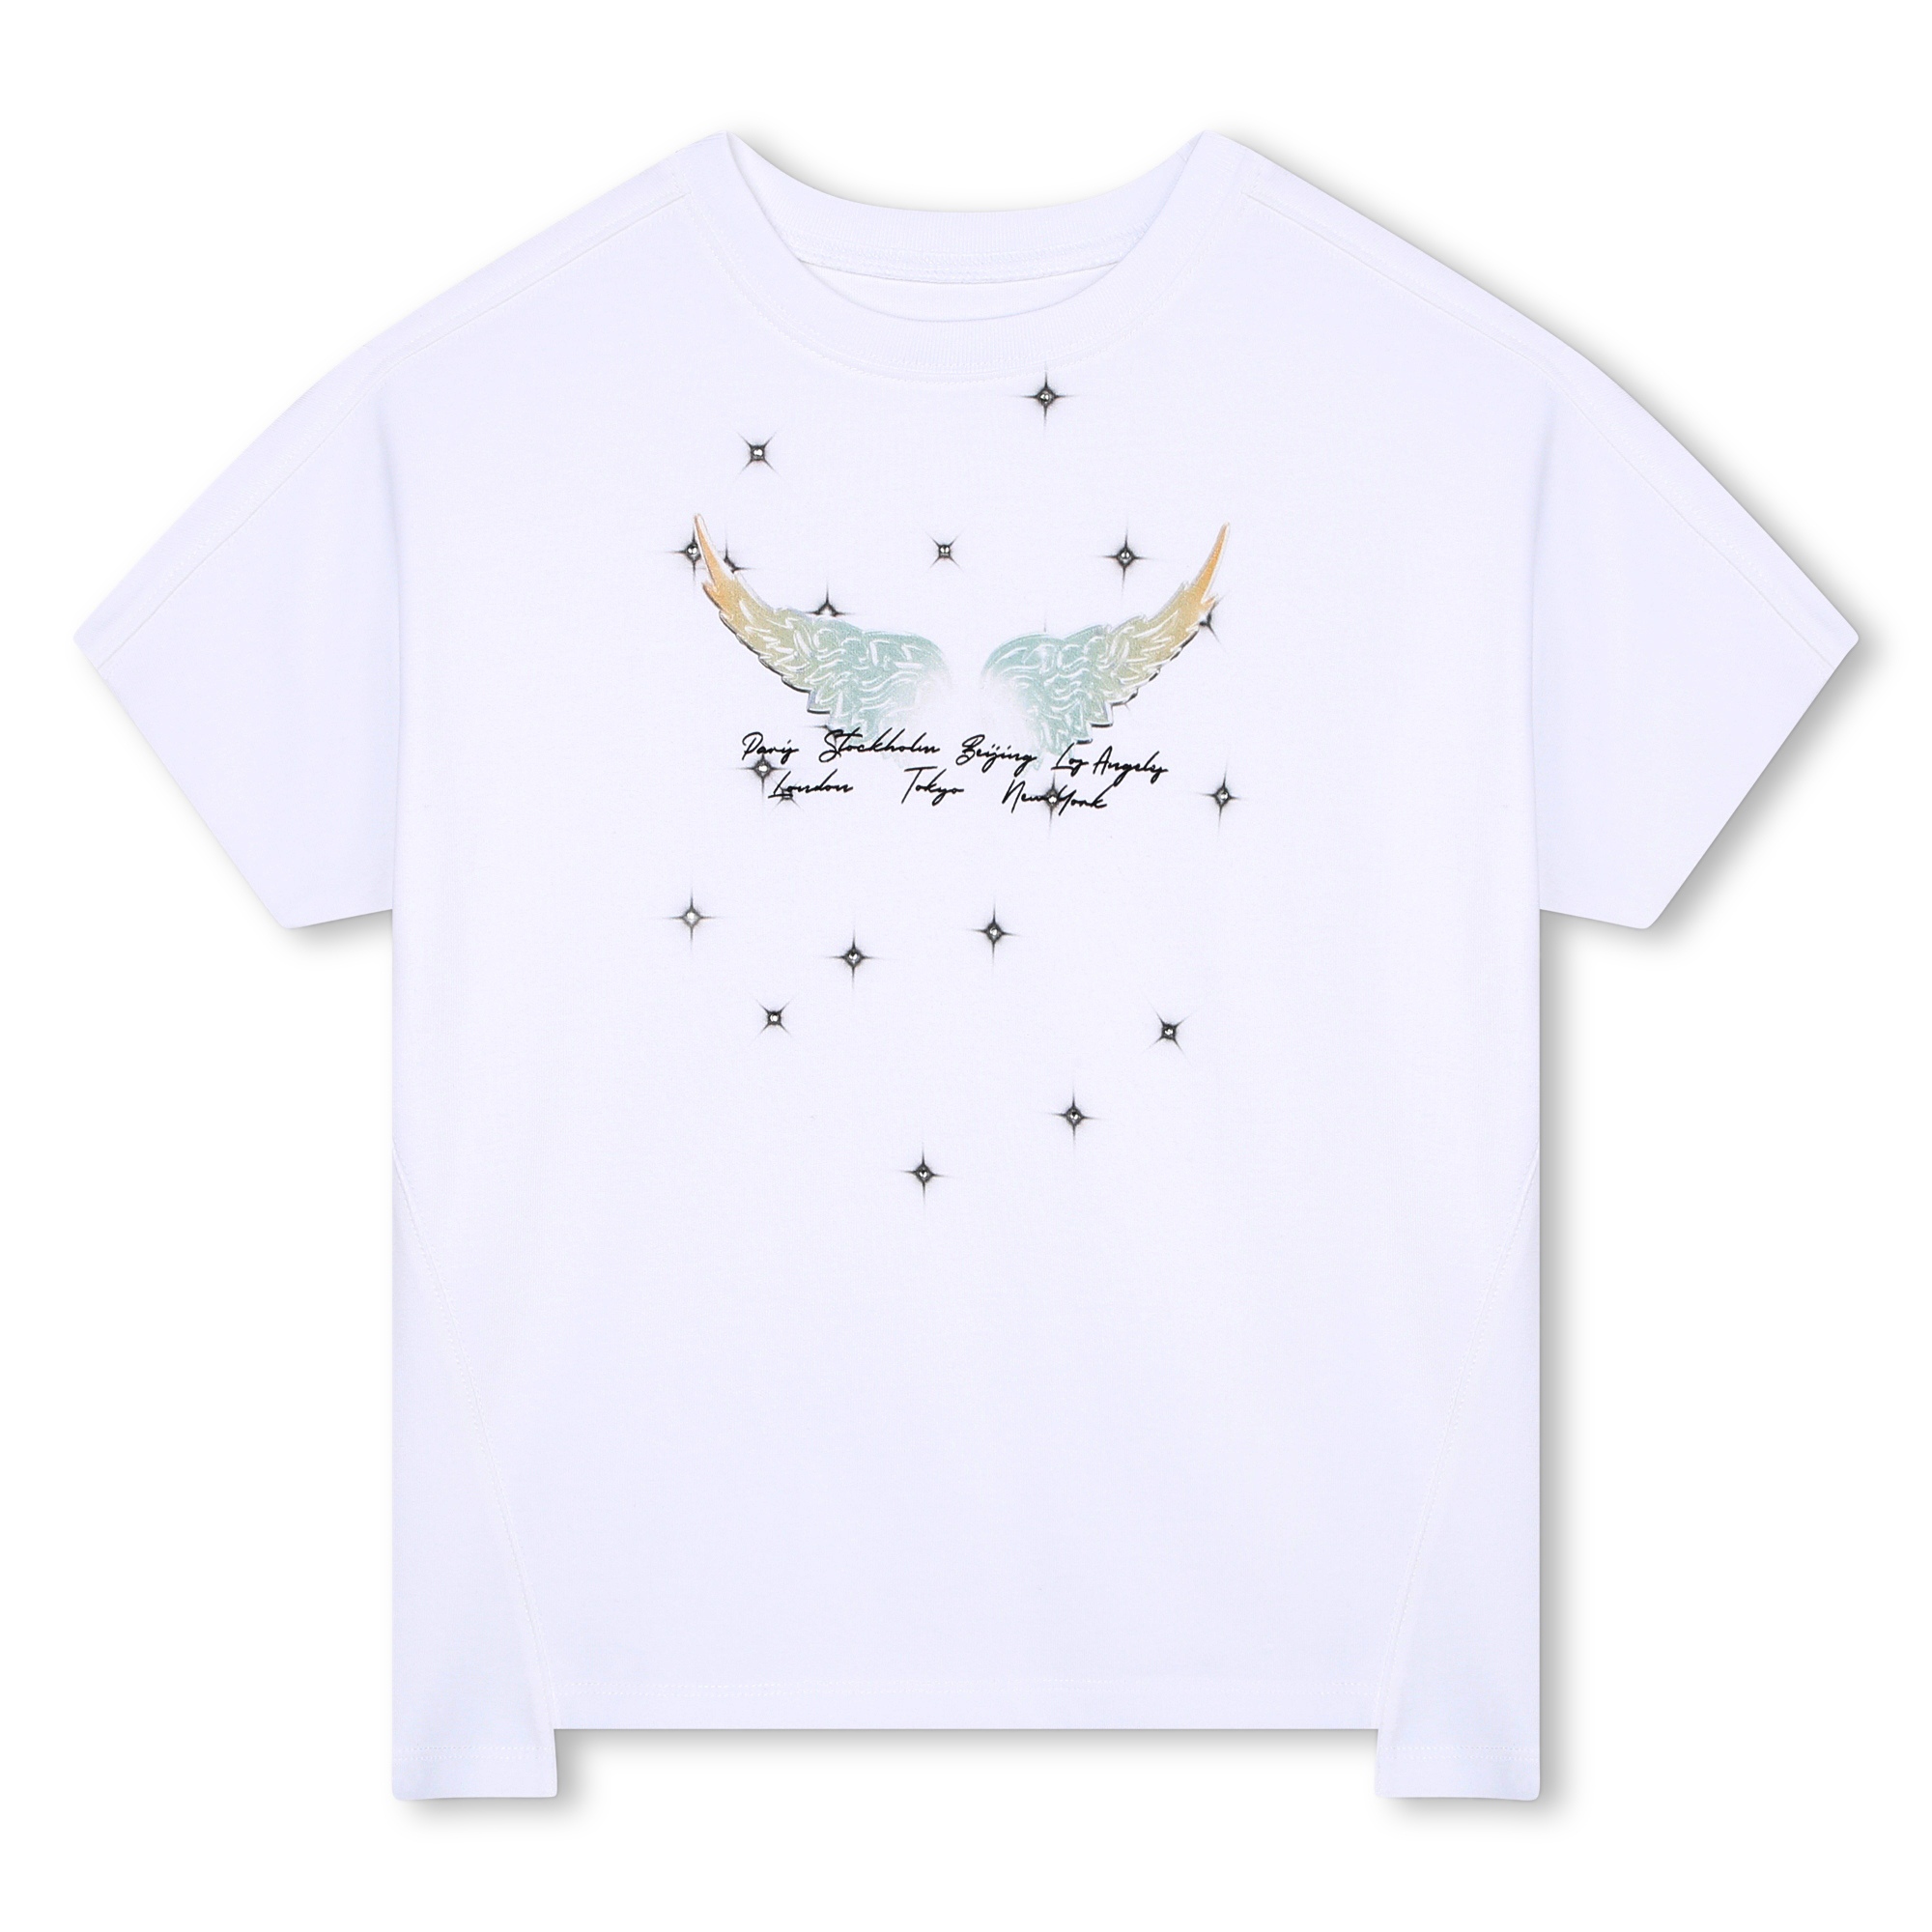 Short-sleeved T-shirt ZADIG & VOLTAIRE for GIRL